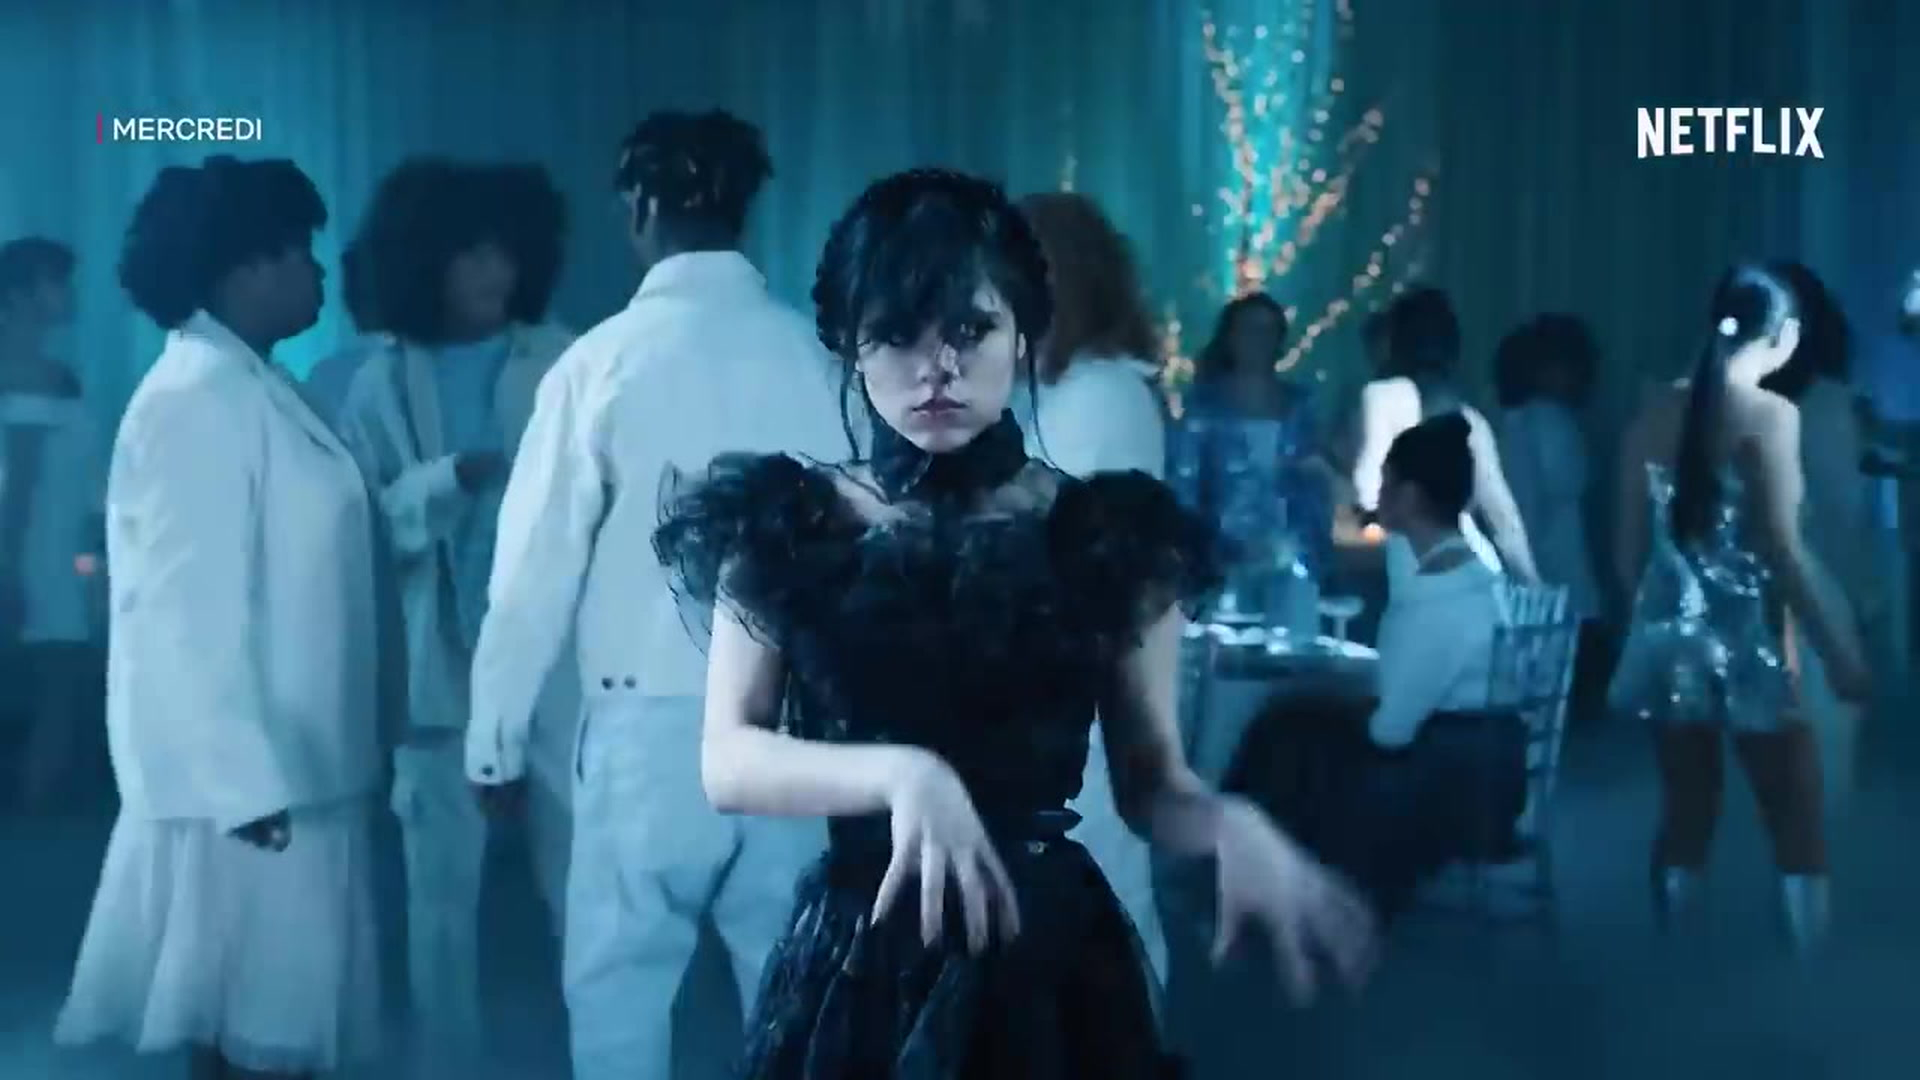 En vidéo, la danse envoûtante de Mercredi Addams devient virale